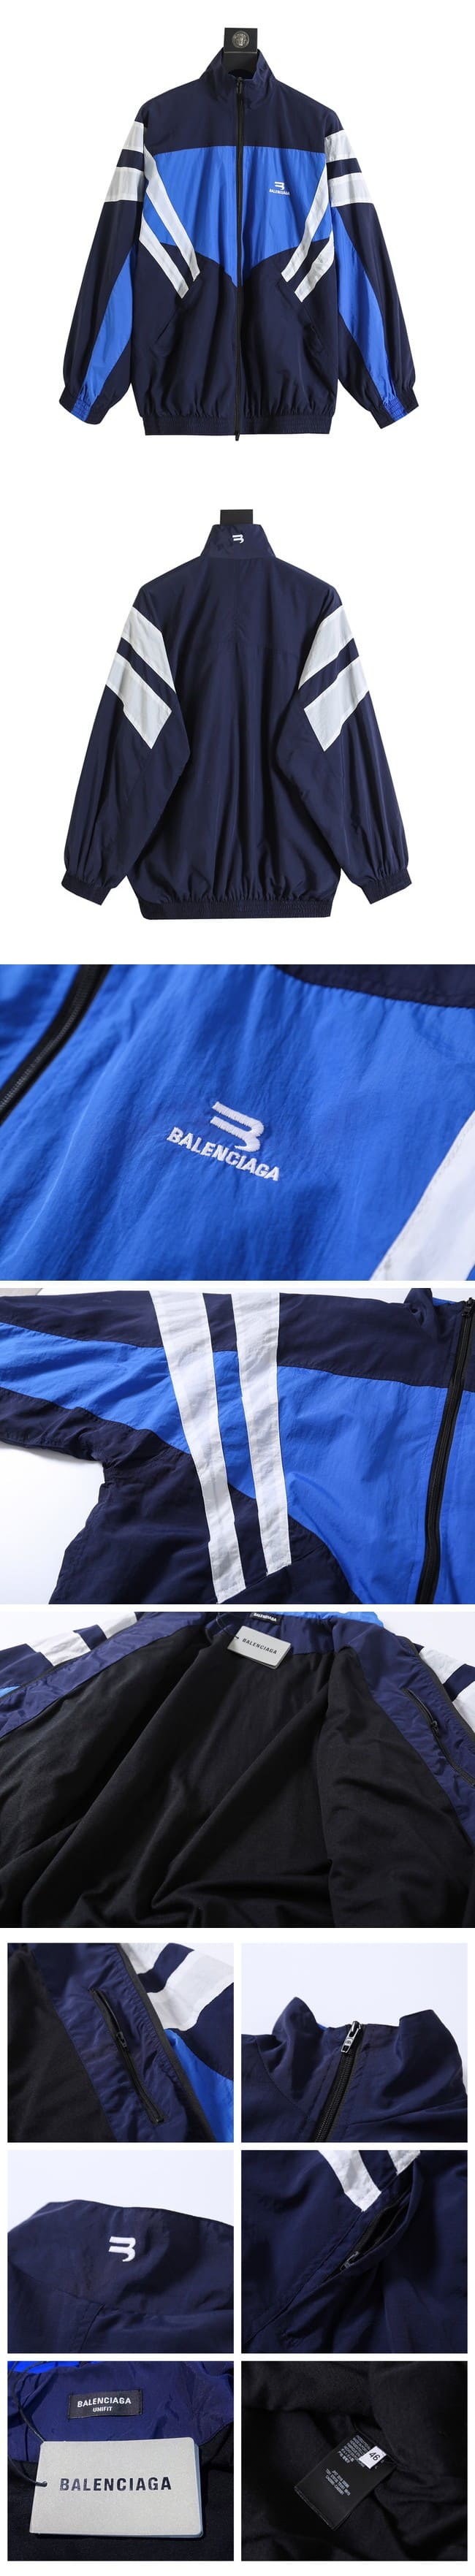 Balenciaga Truck Jacket Blue バレンシアガ ロゴ ナイロン トラックジャケット ブルー